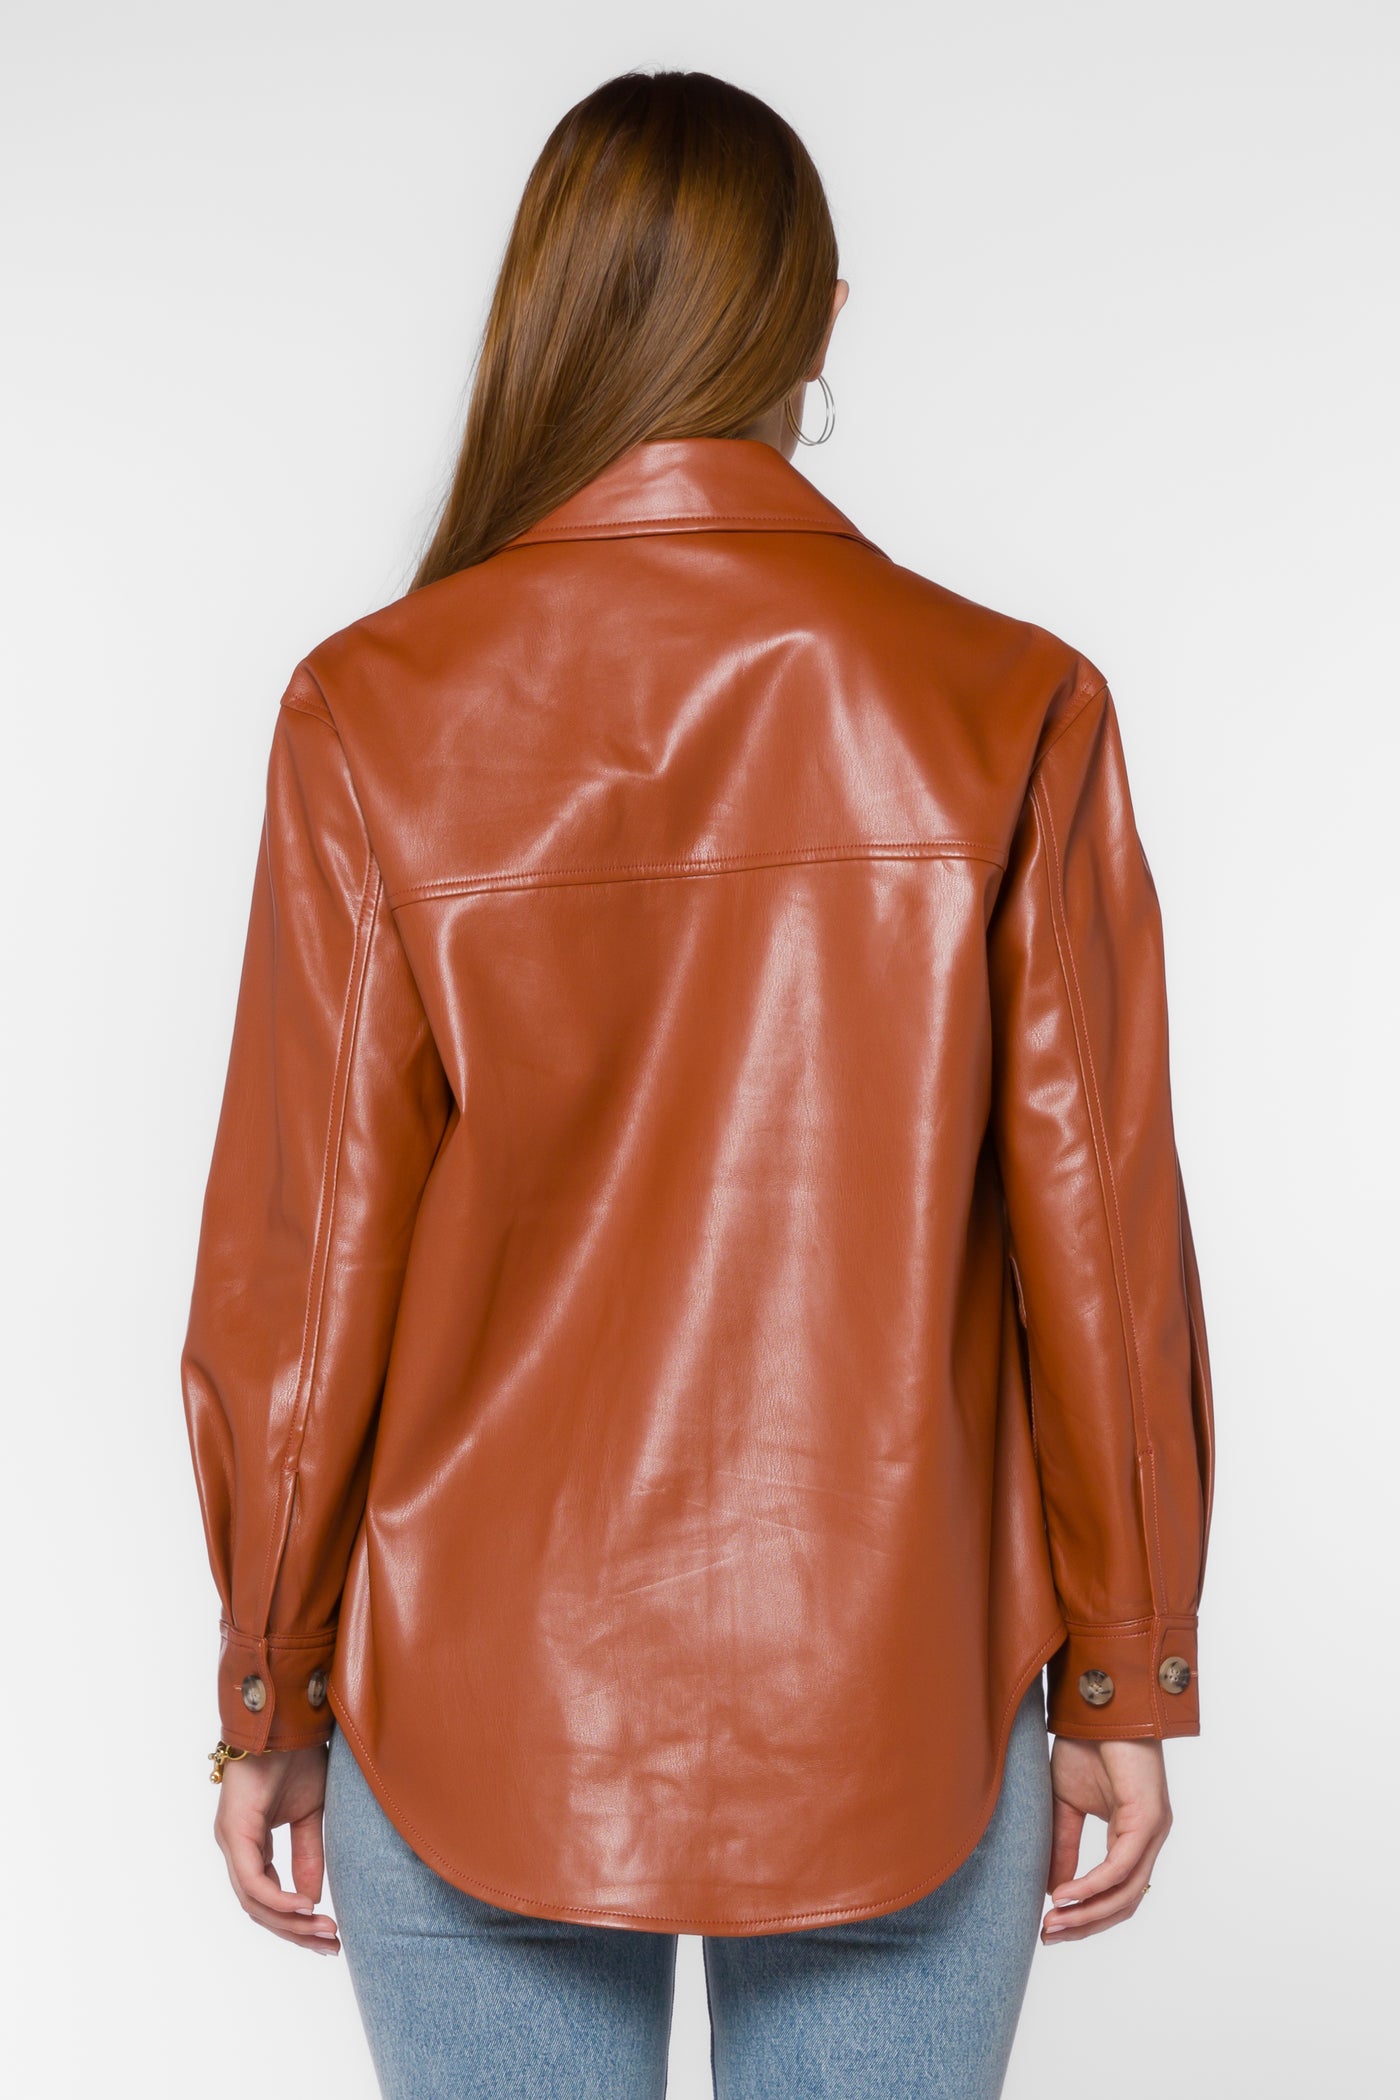 Eleanor Maple Syrup Jacket - Jackets & Outerwear - Velvet Heart Clothing